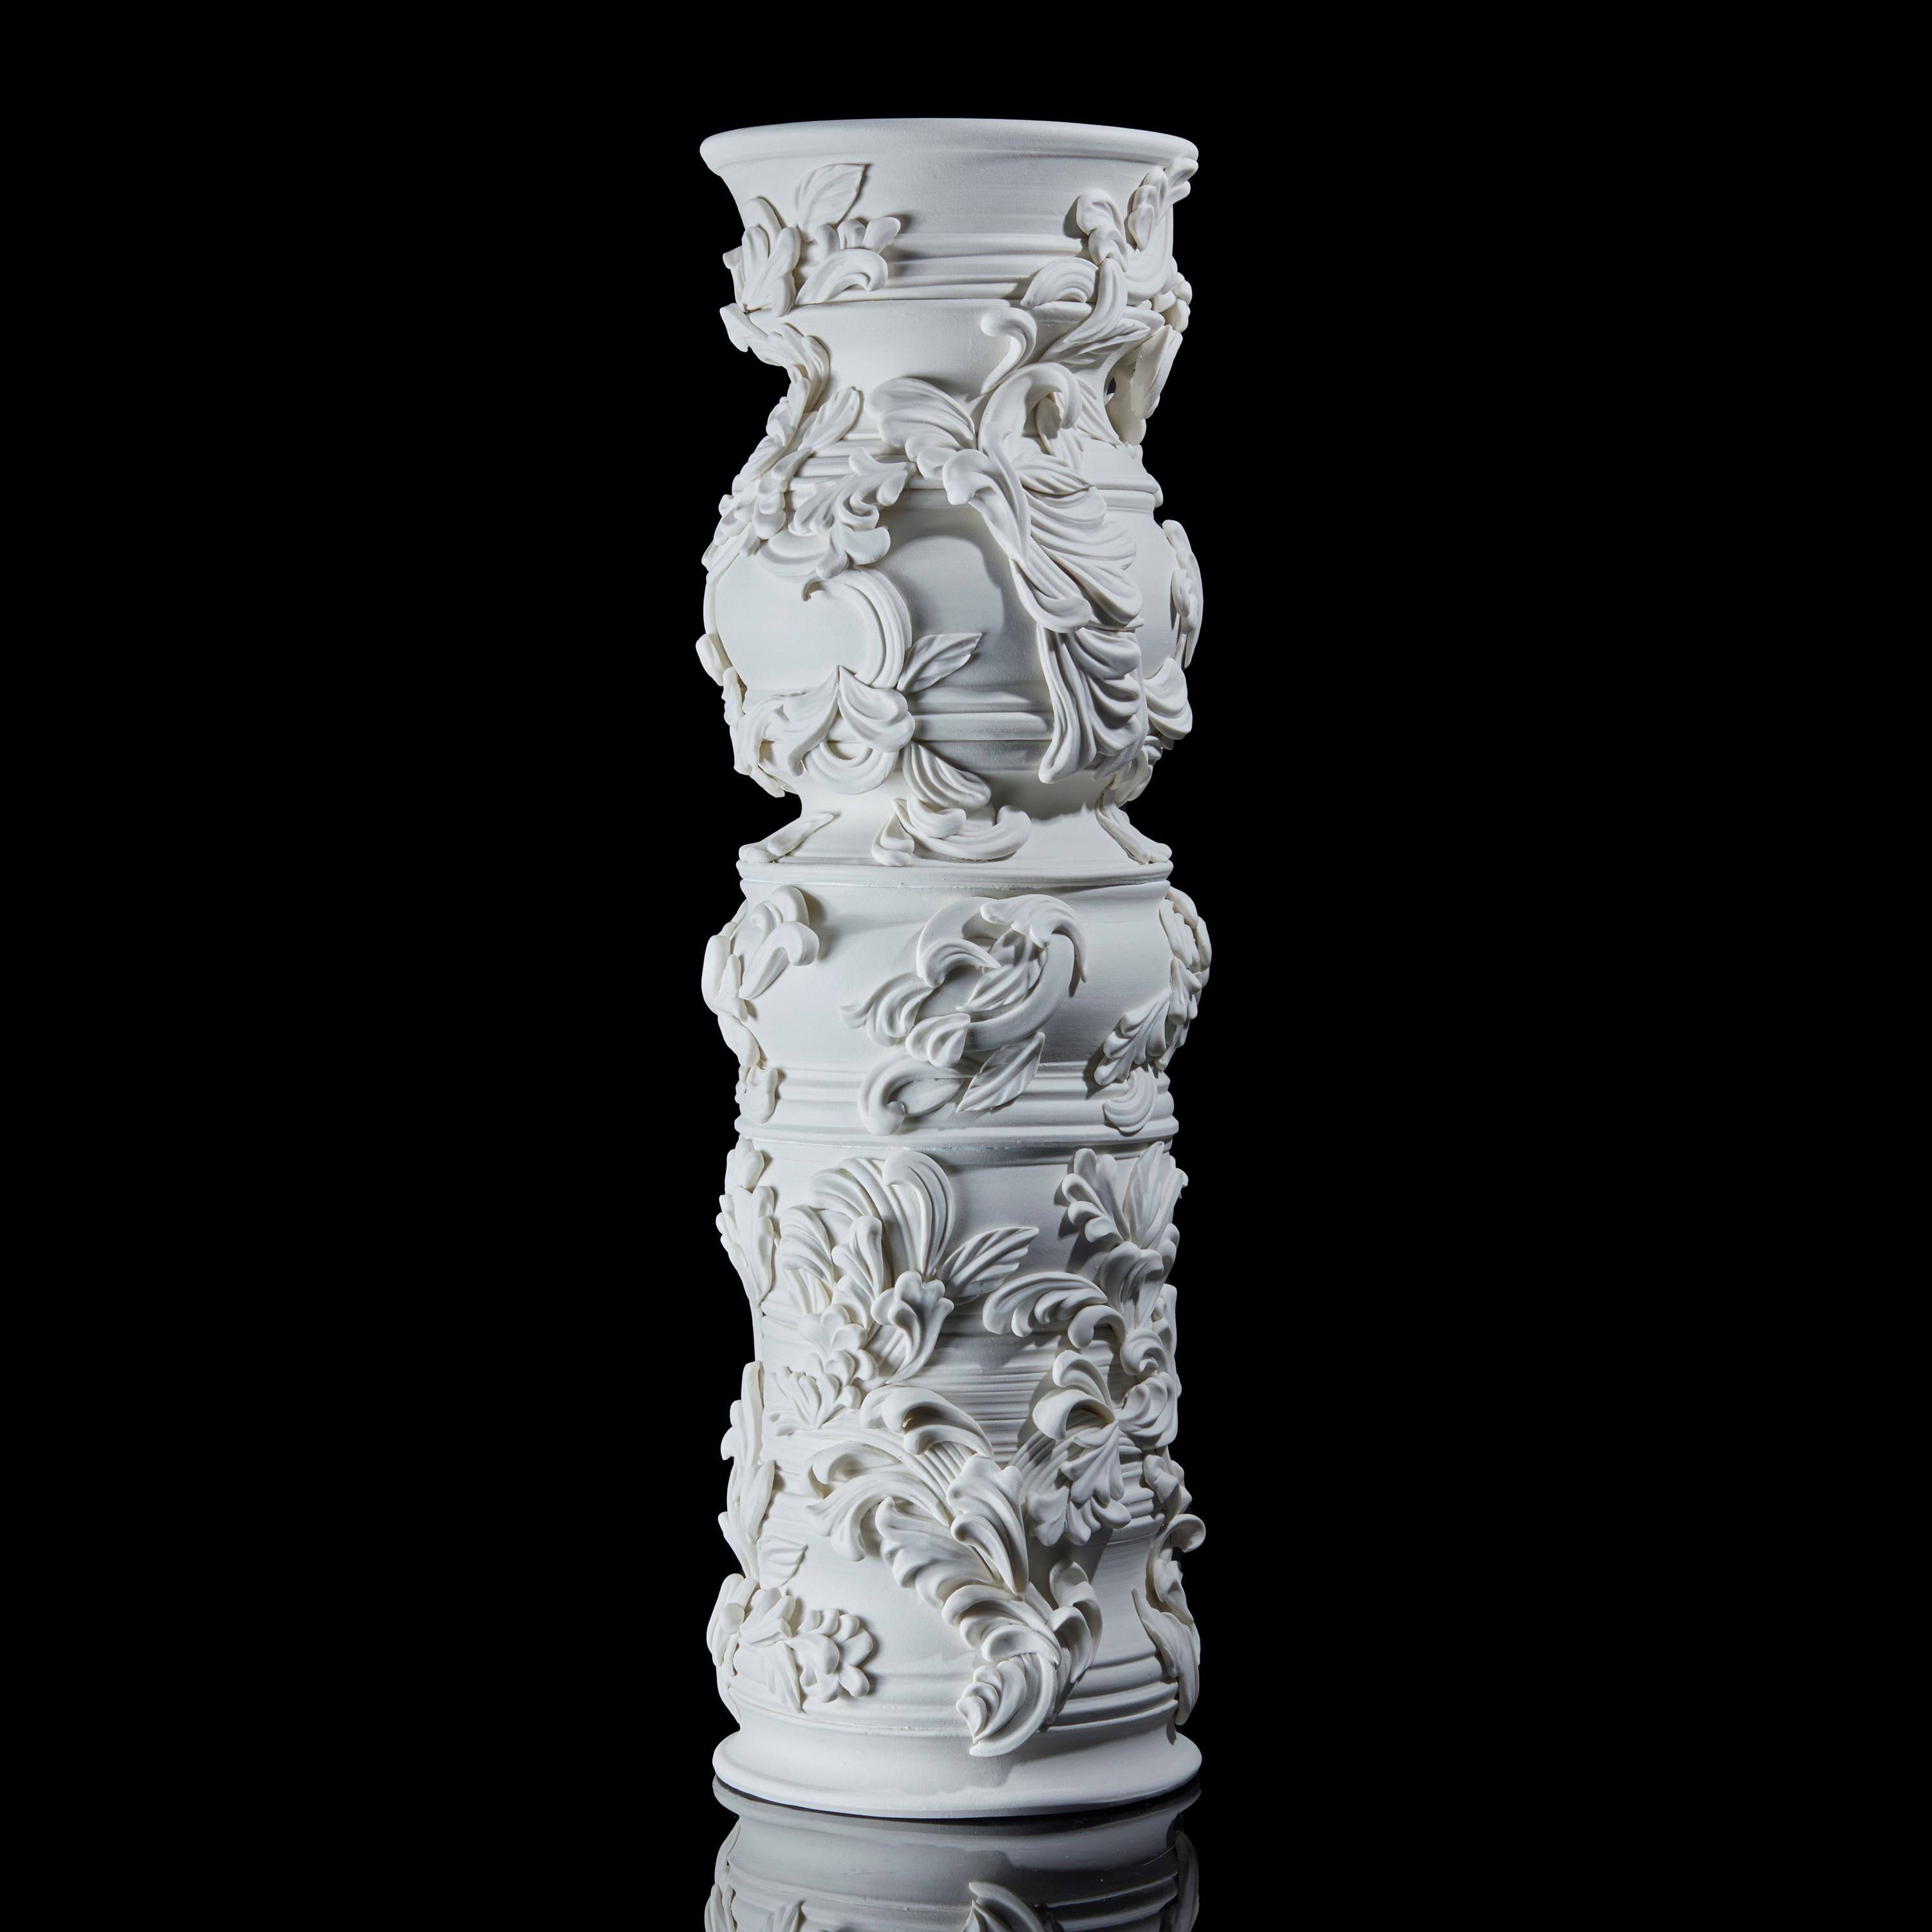 Organic Modern Promenade III, a Unique Ceramic Sculptural Tall Vase in Porcelain by Jo Taylor